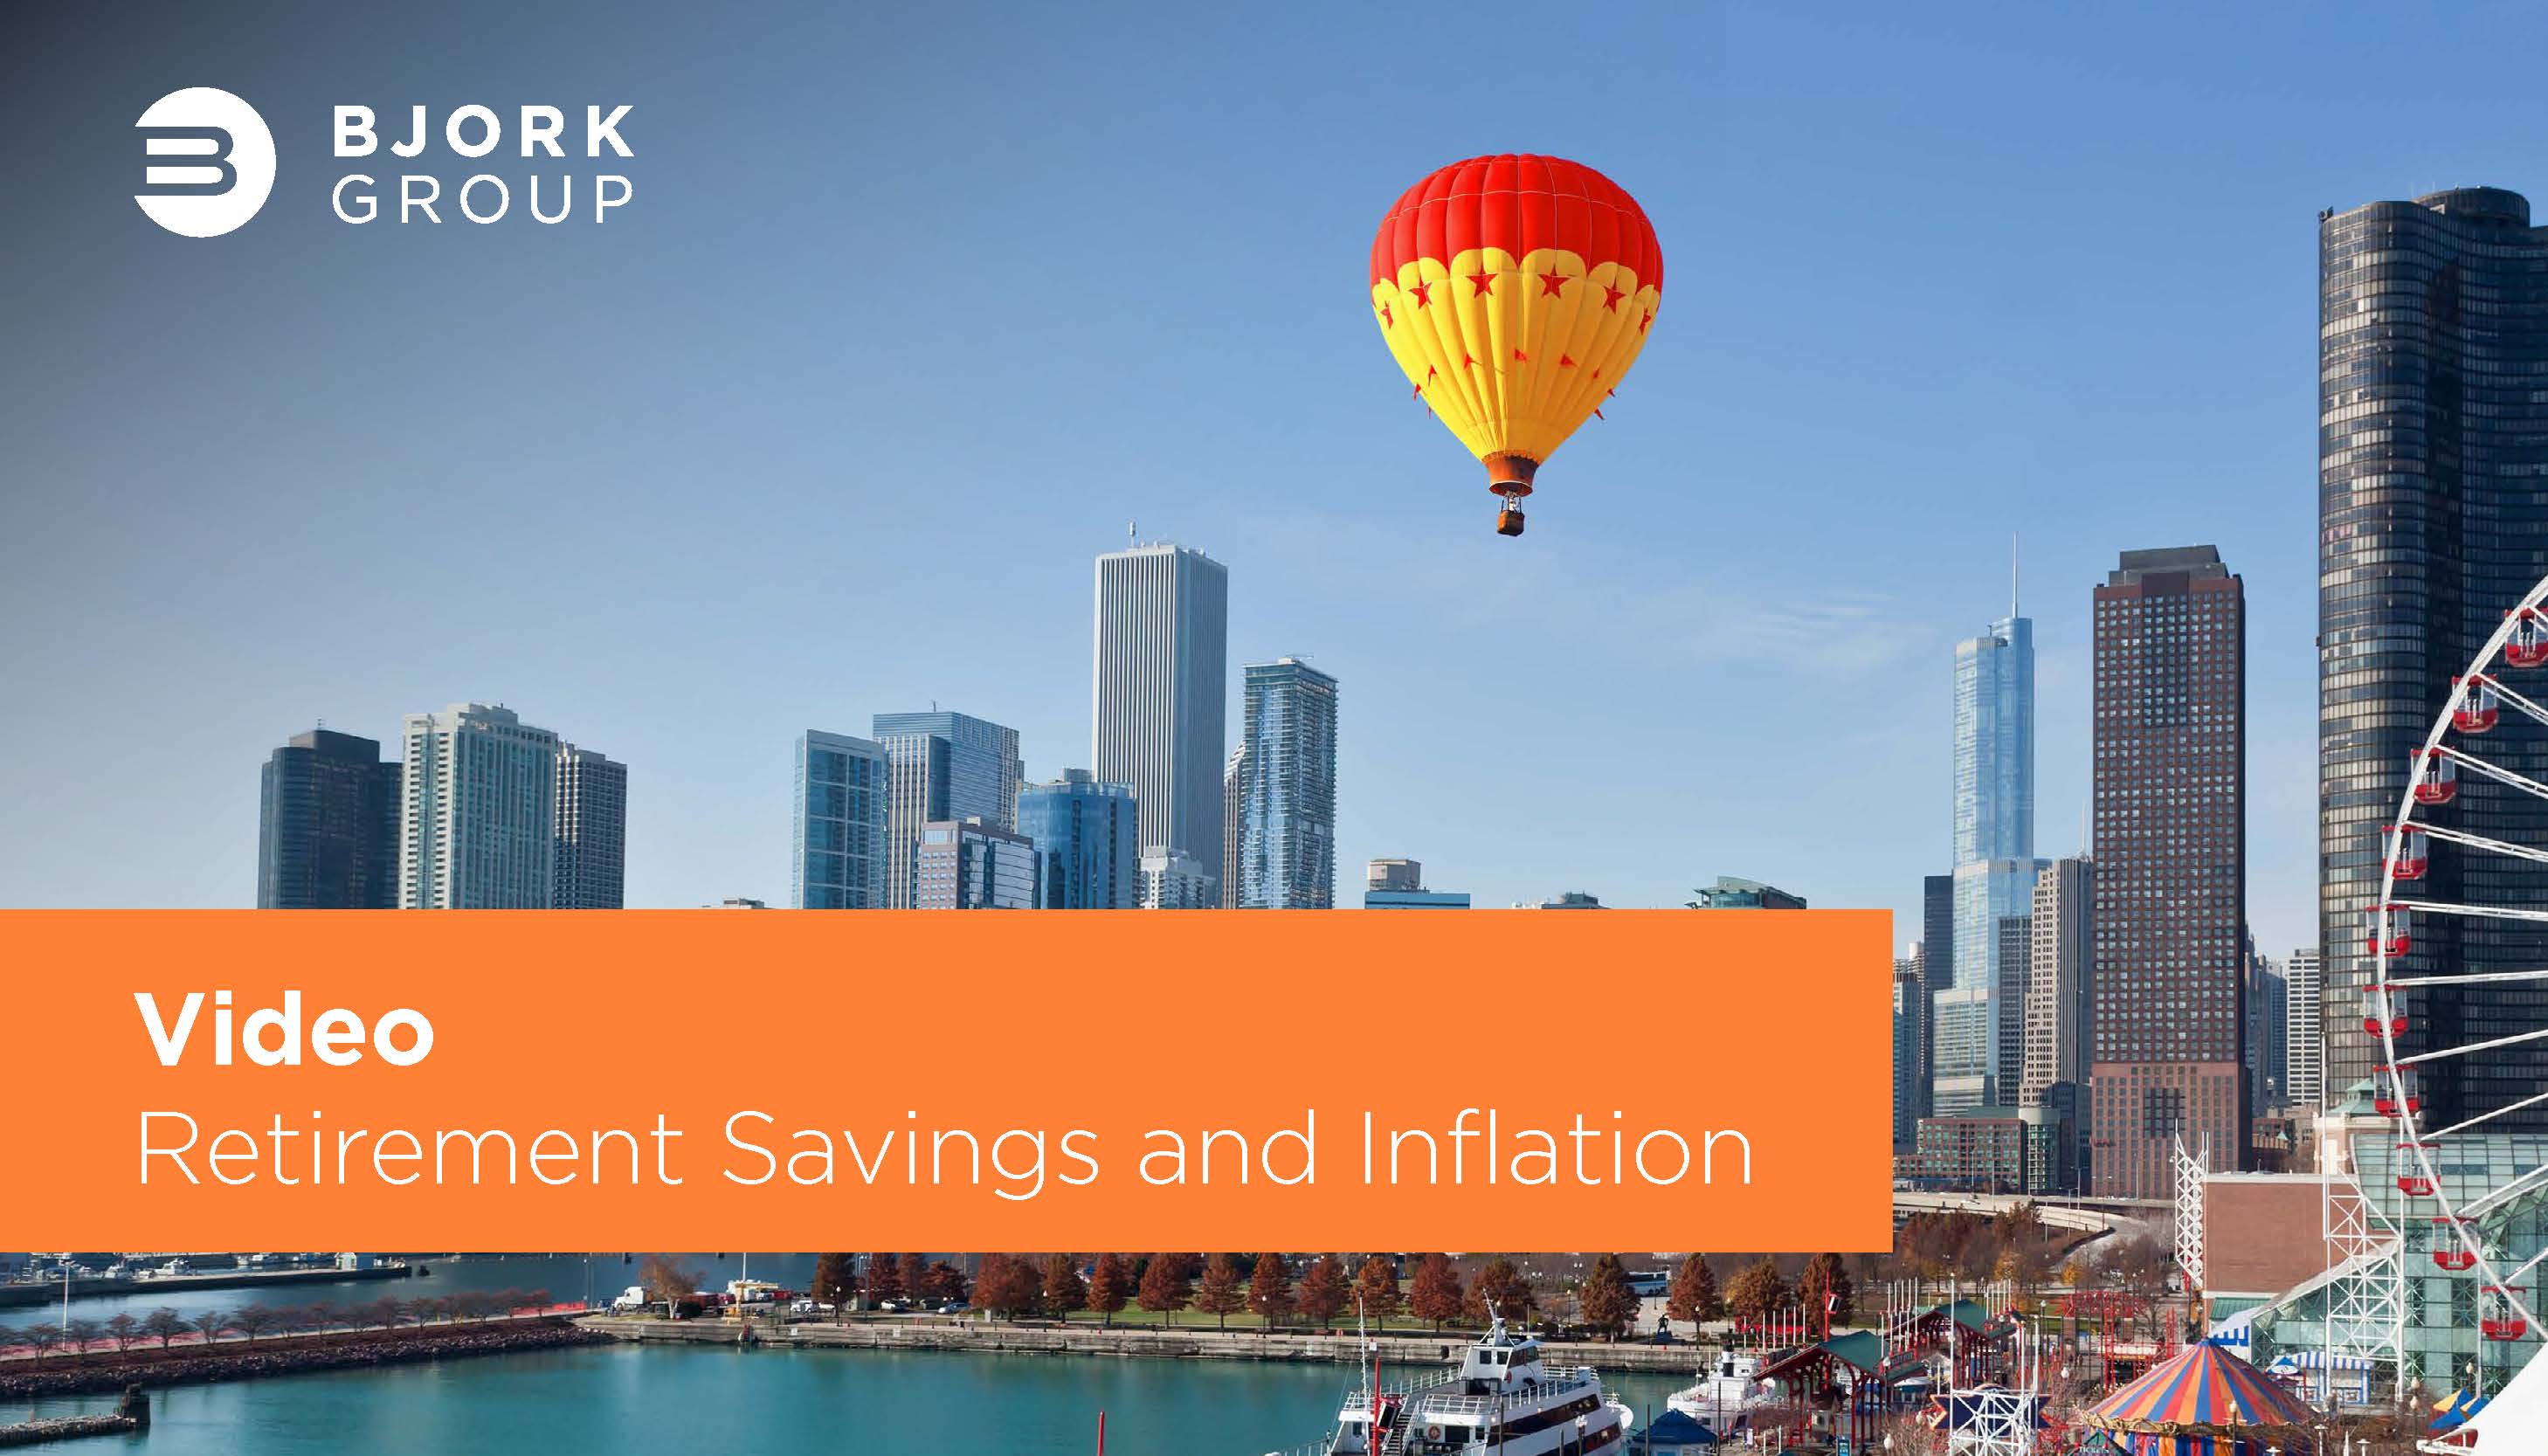 Bjork Group-Sean Bjork-Inflation and Retirement Savings